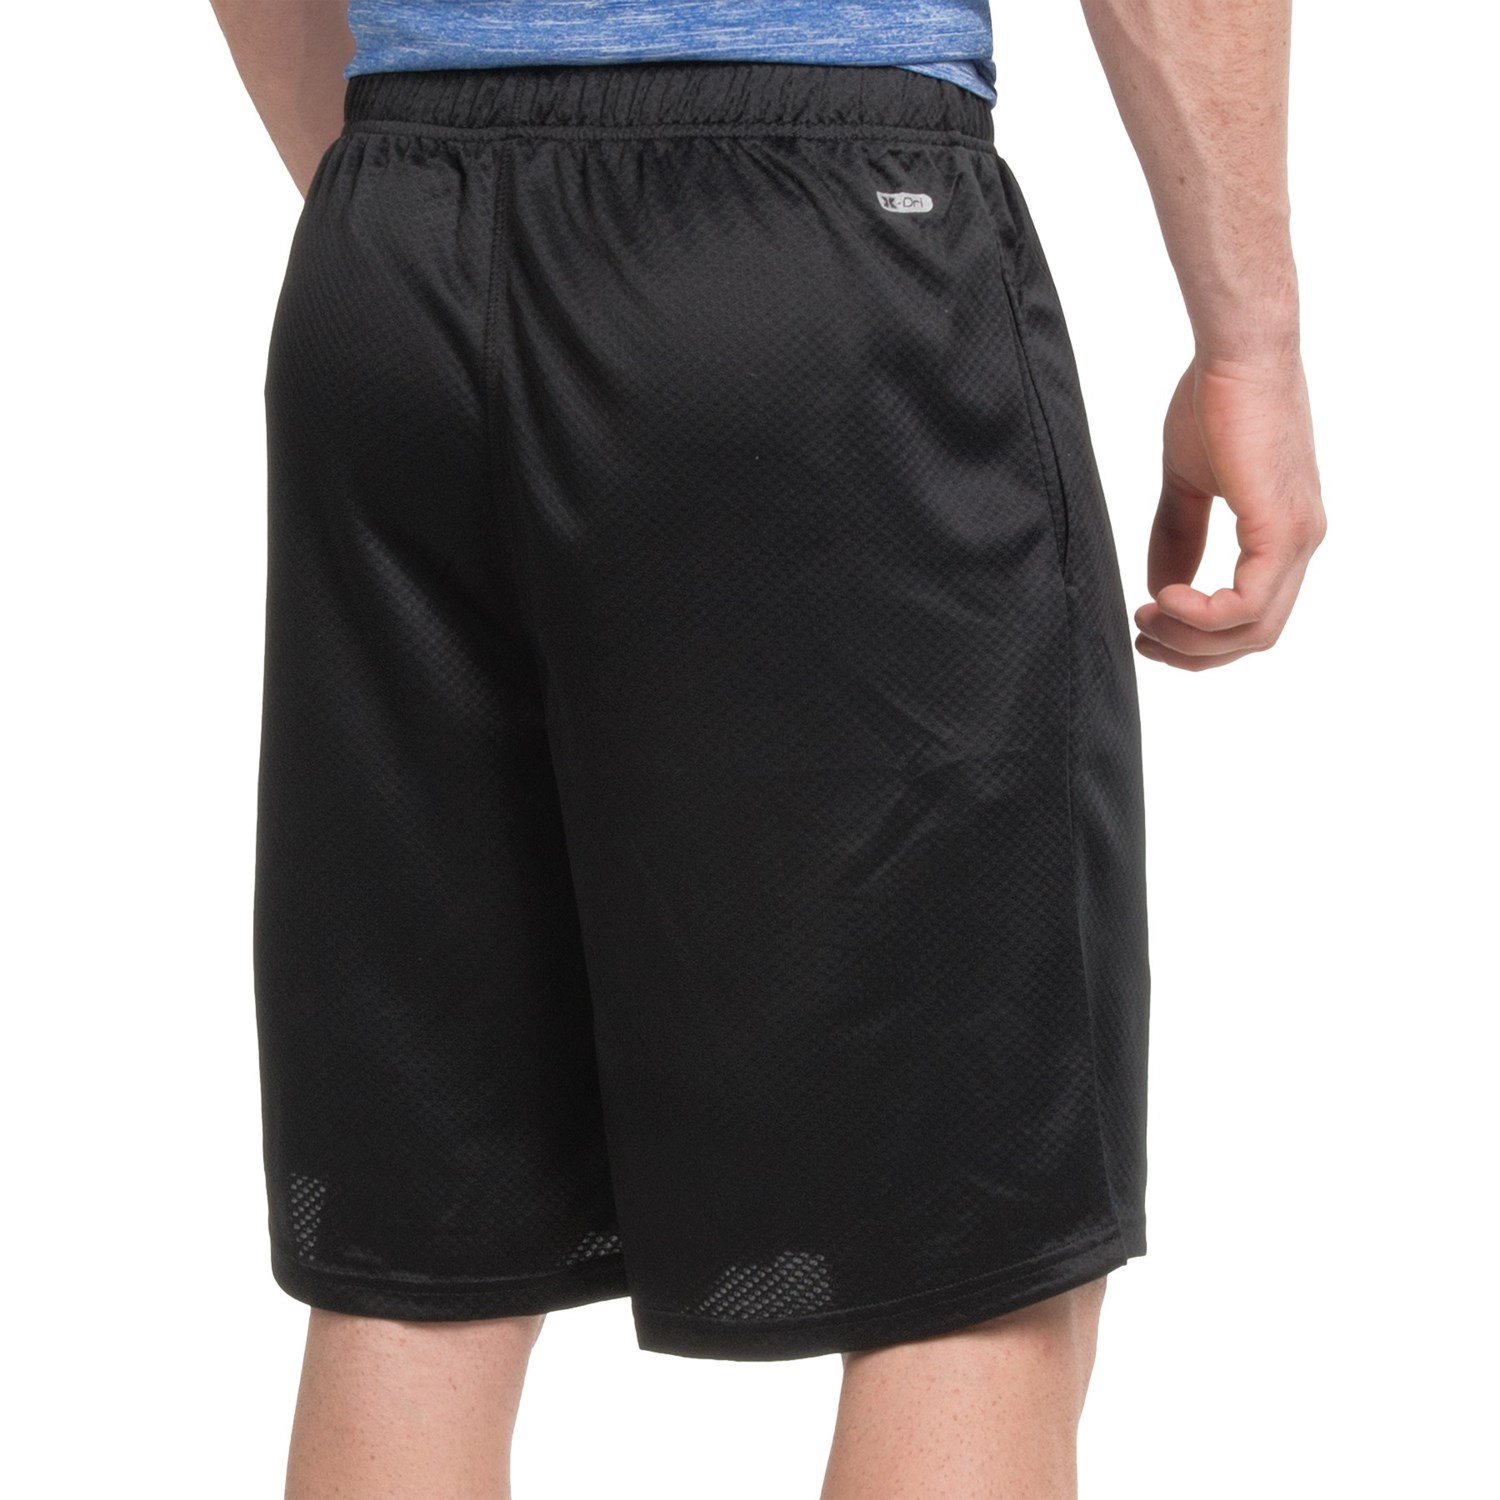 RBX Jacquard Training Shorts (For Men) - Save 78%